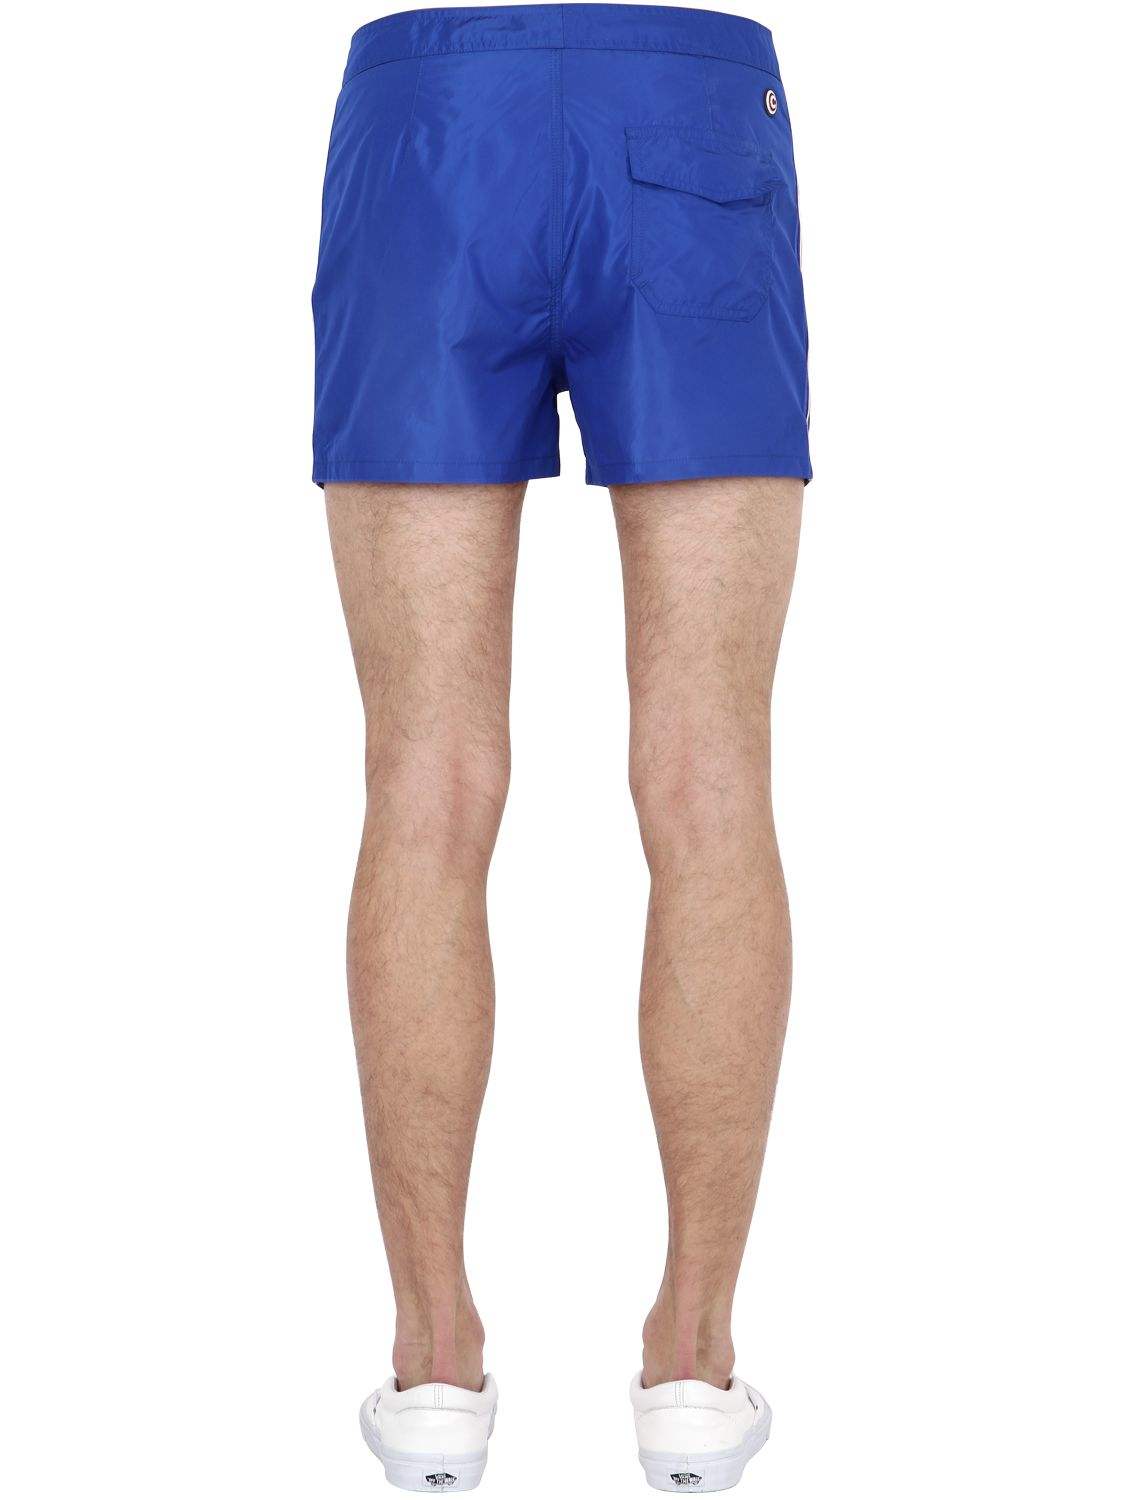 Blue Nylon Shorts 118